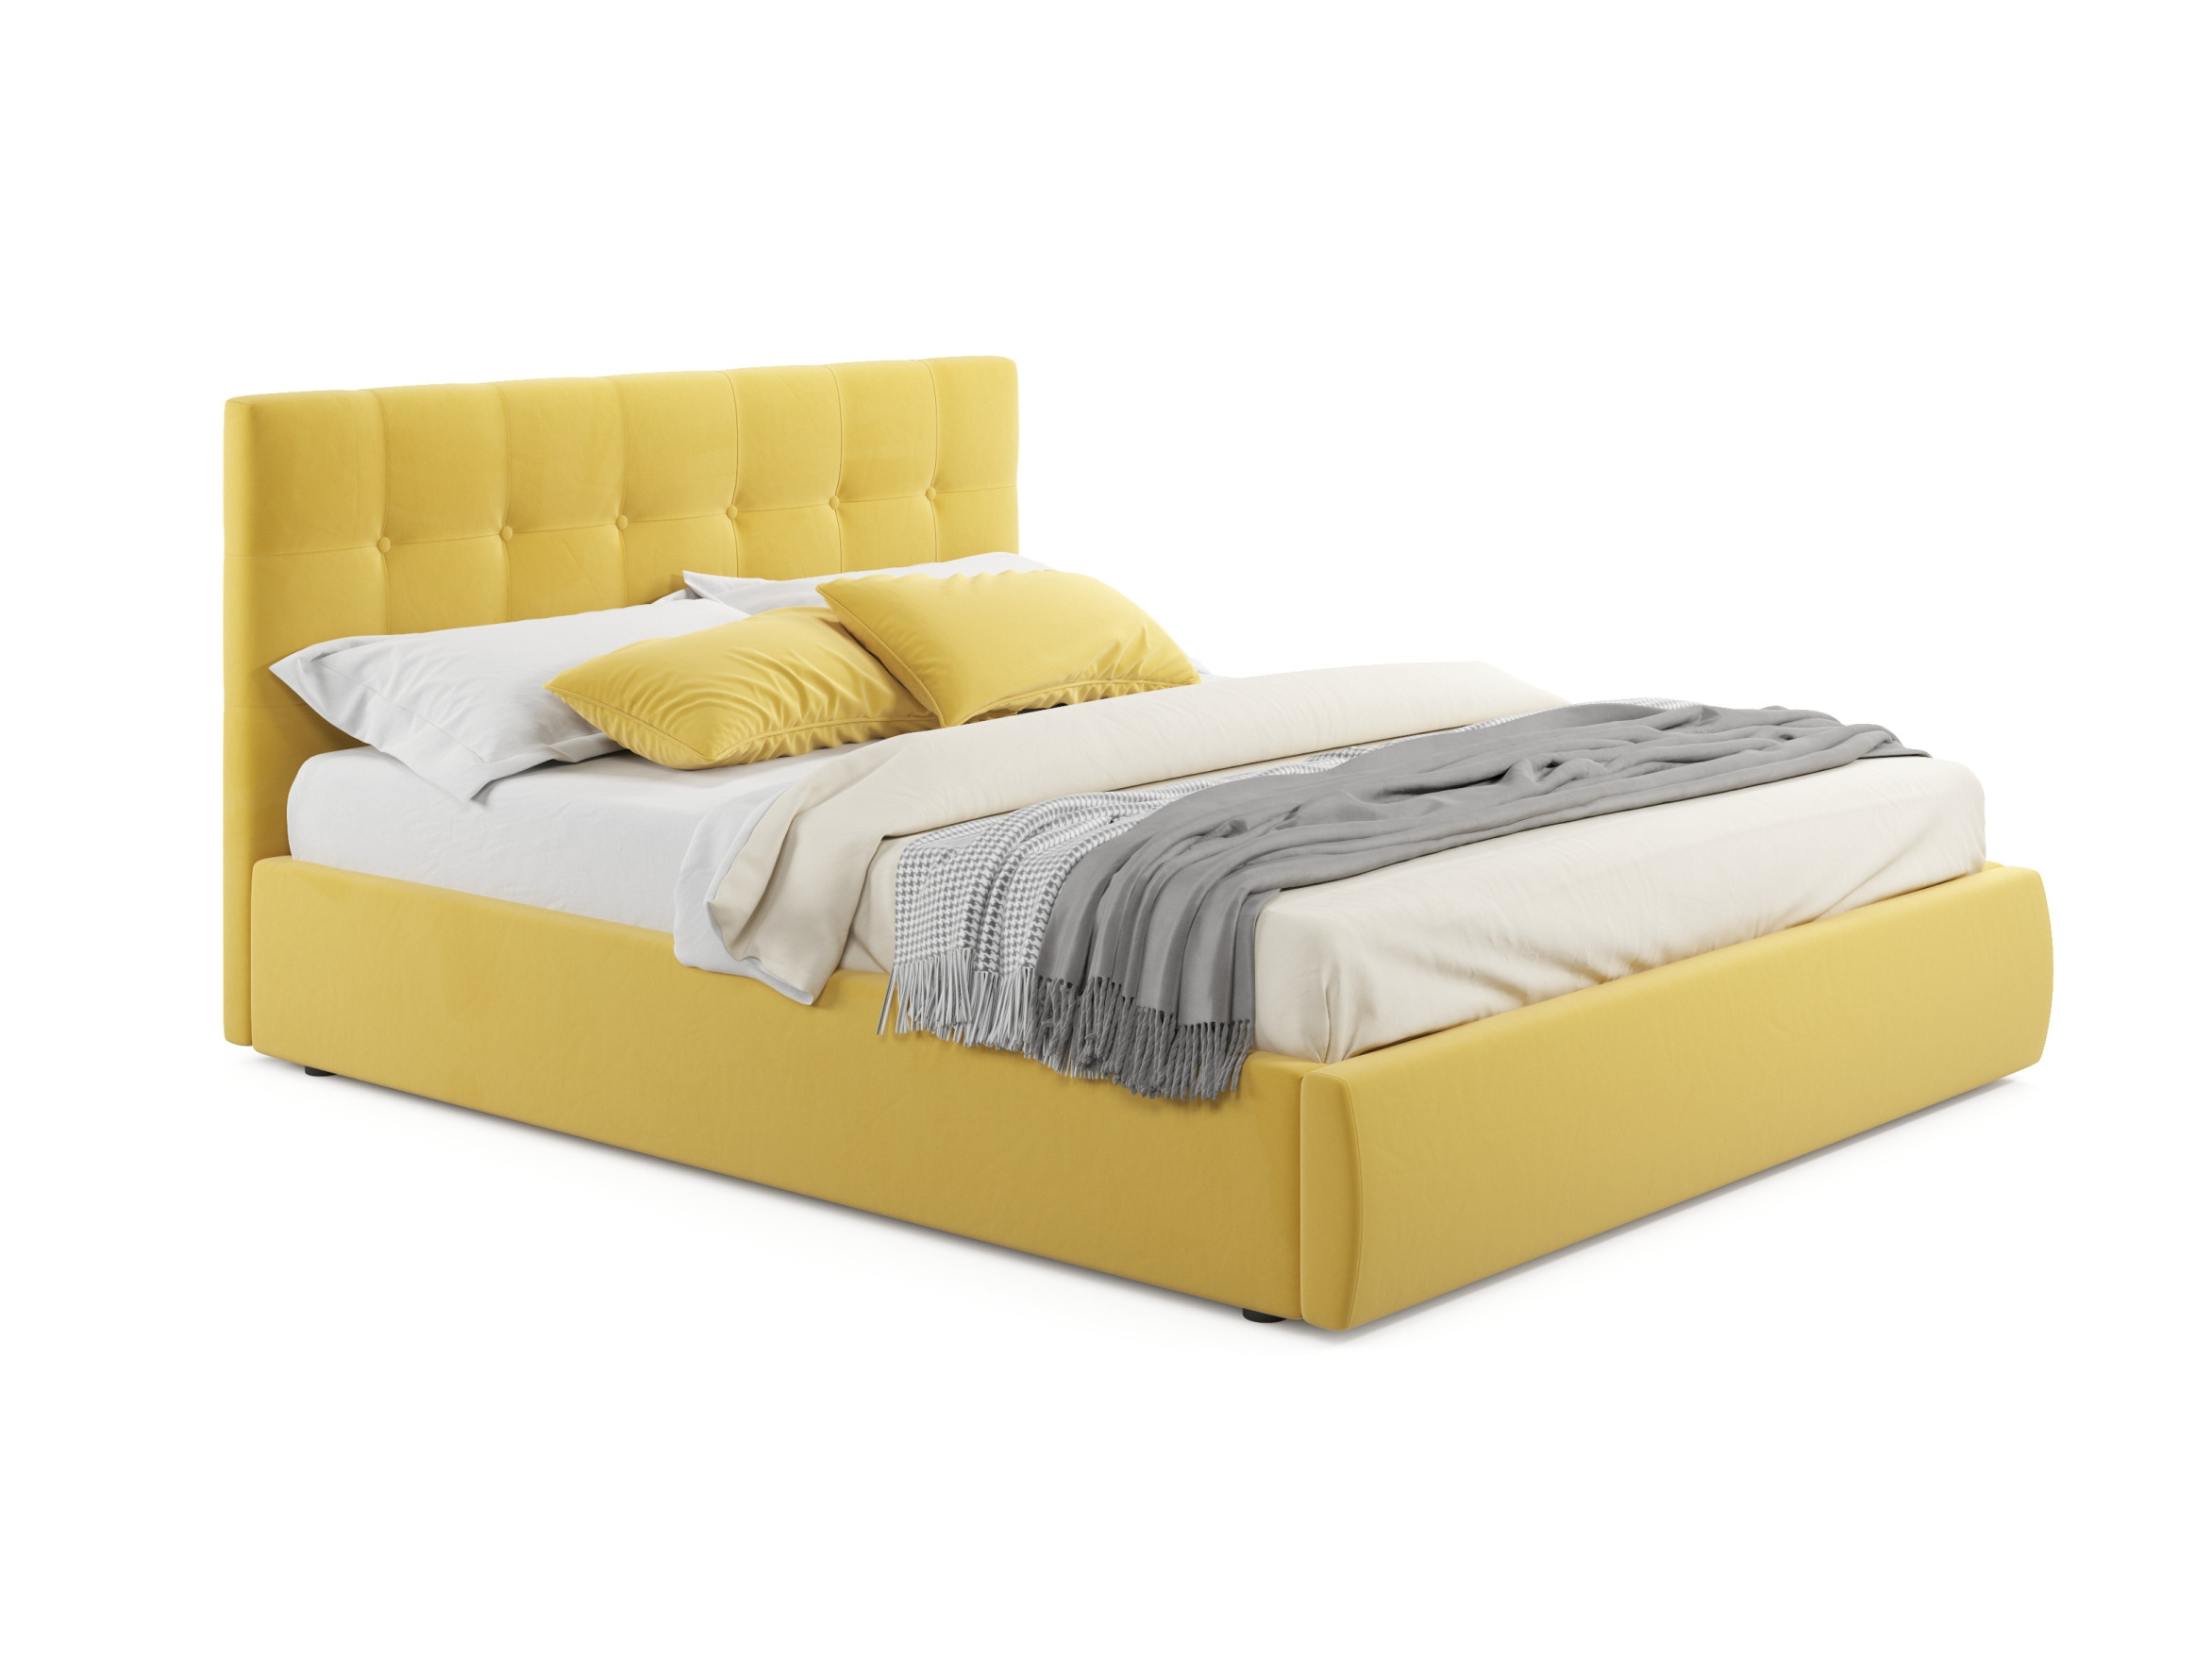 Комплект для сна Selesta 1400 желтый с подъемным механизмом желтый, Желтый, Велюр, ДСП